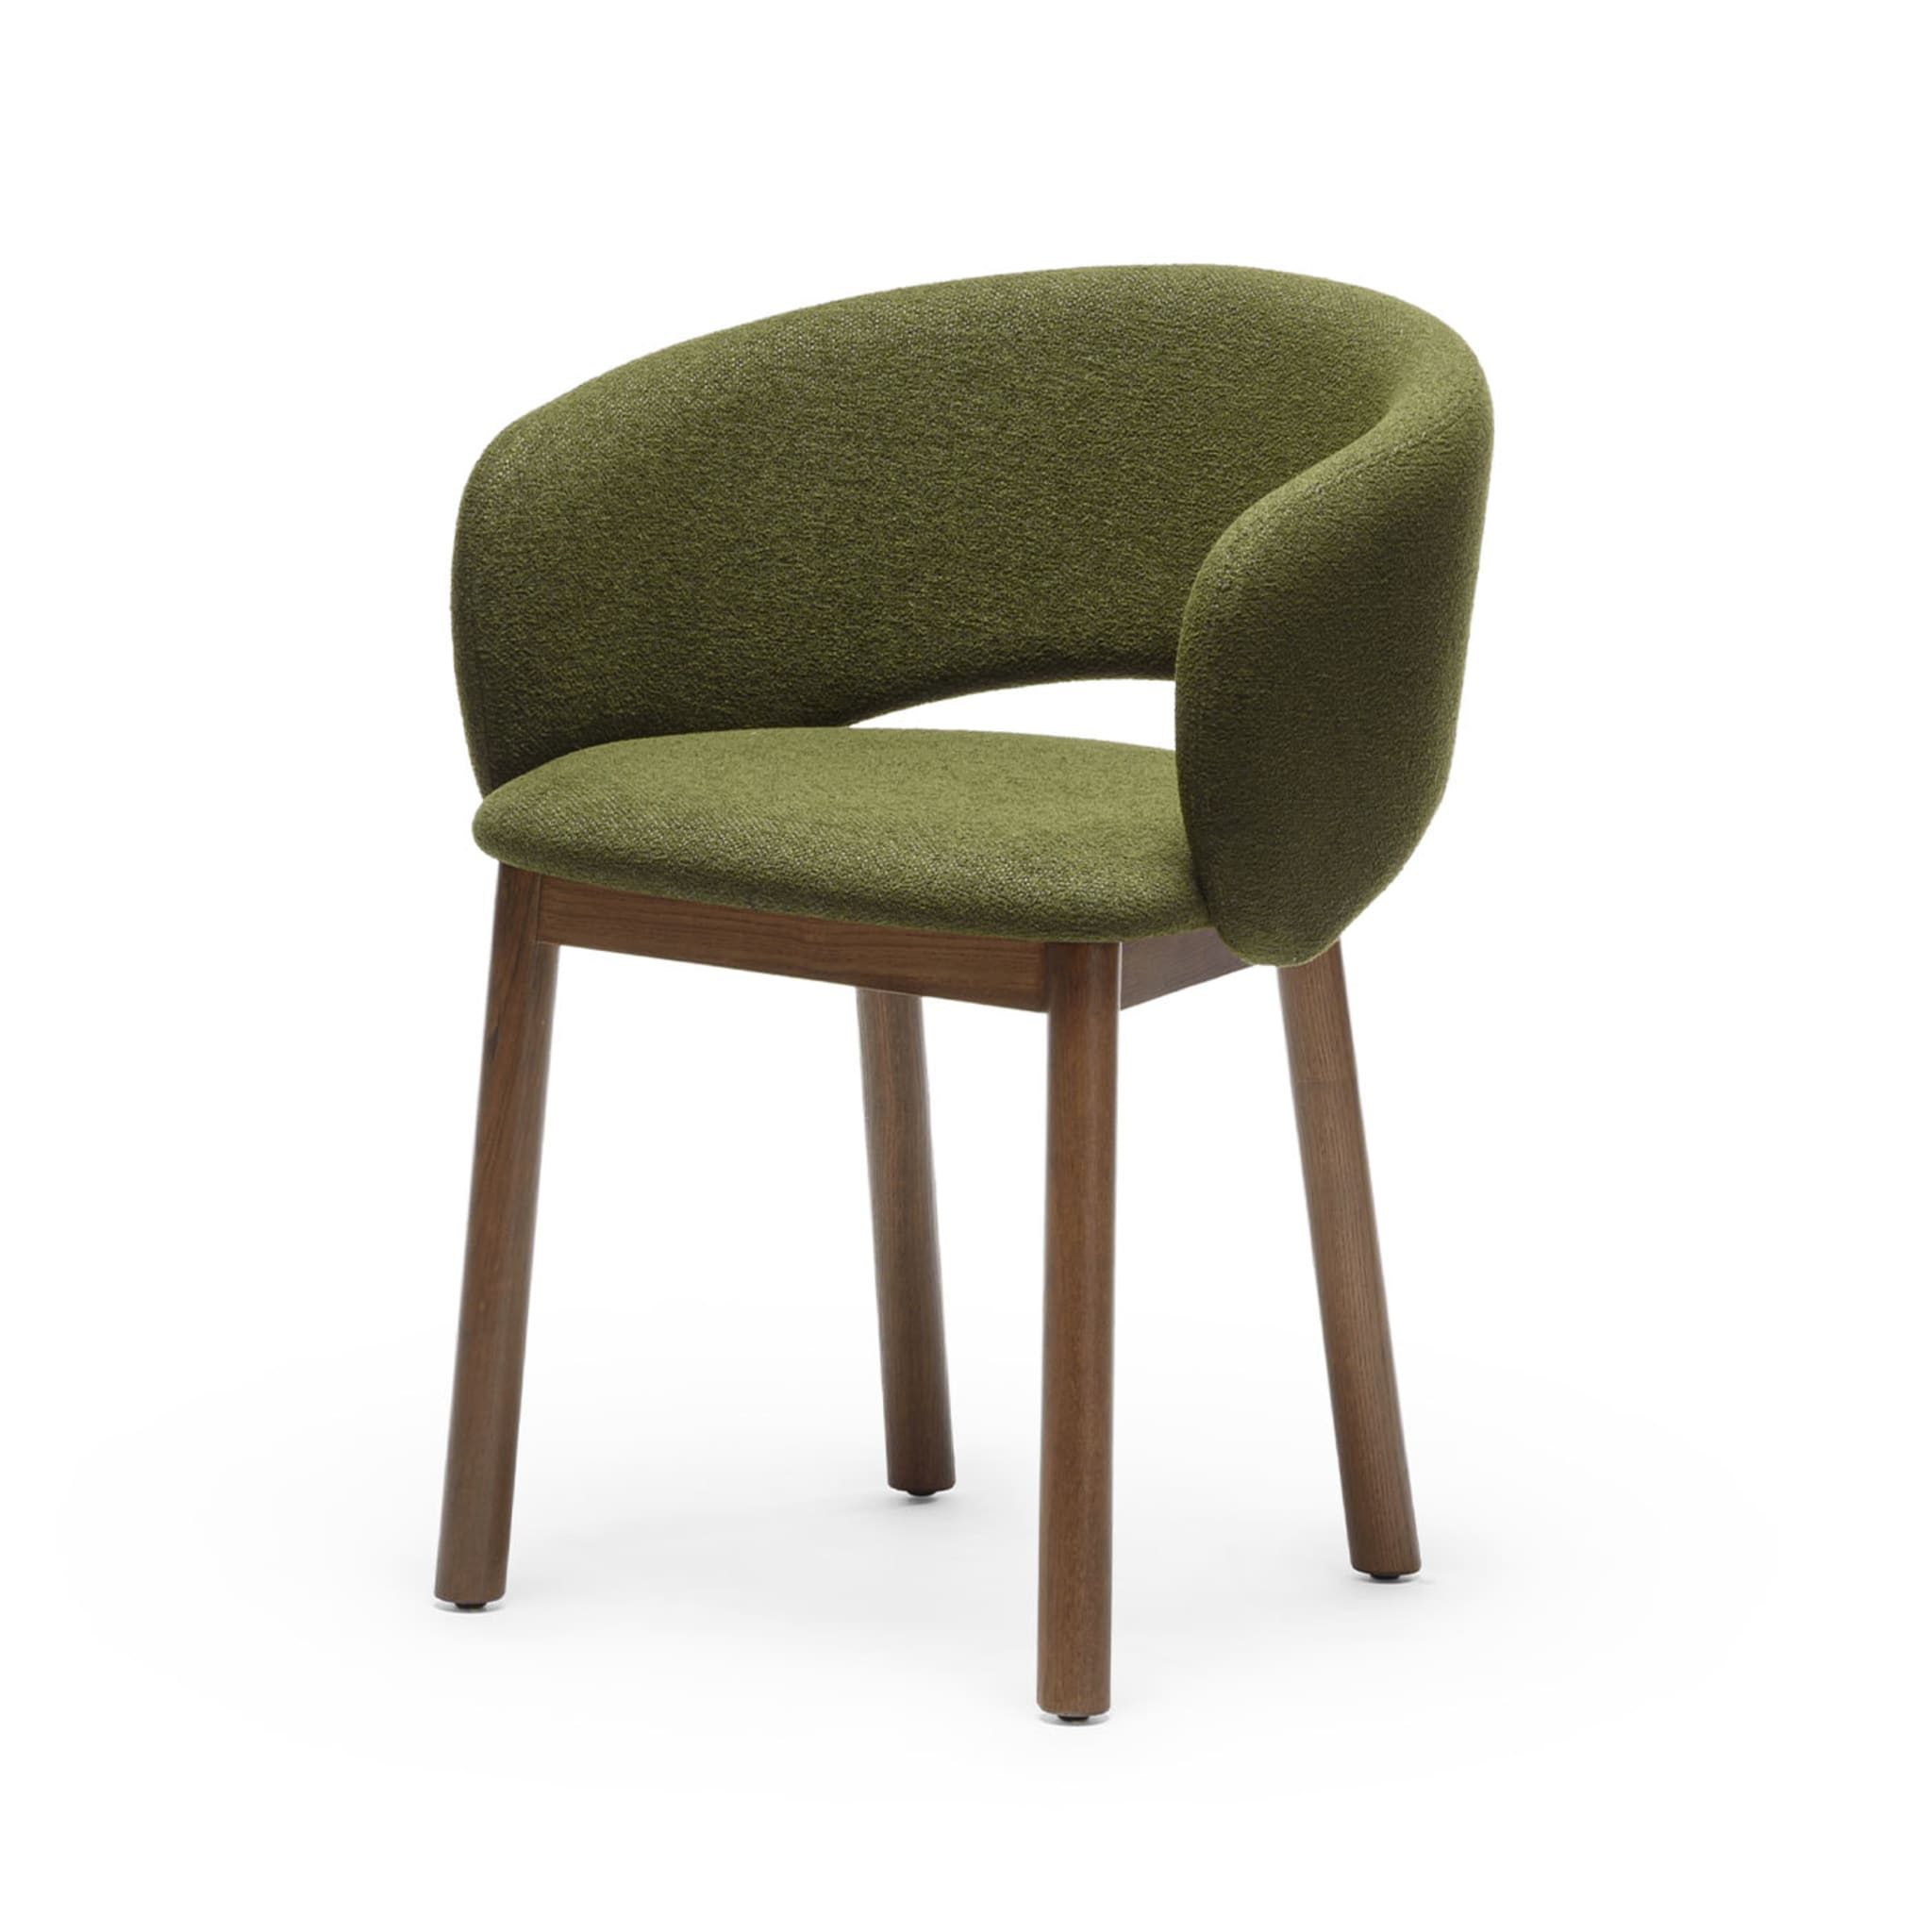 Bel S Green Chair By Pablo Regano - Alternative view 3